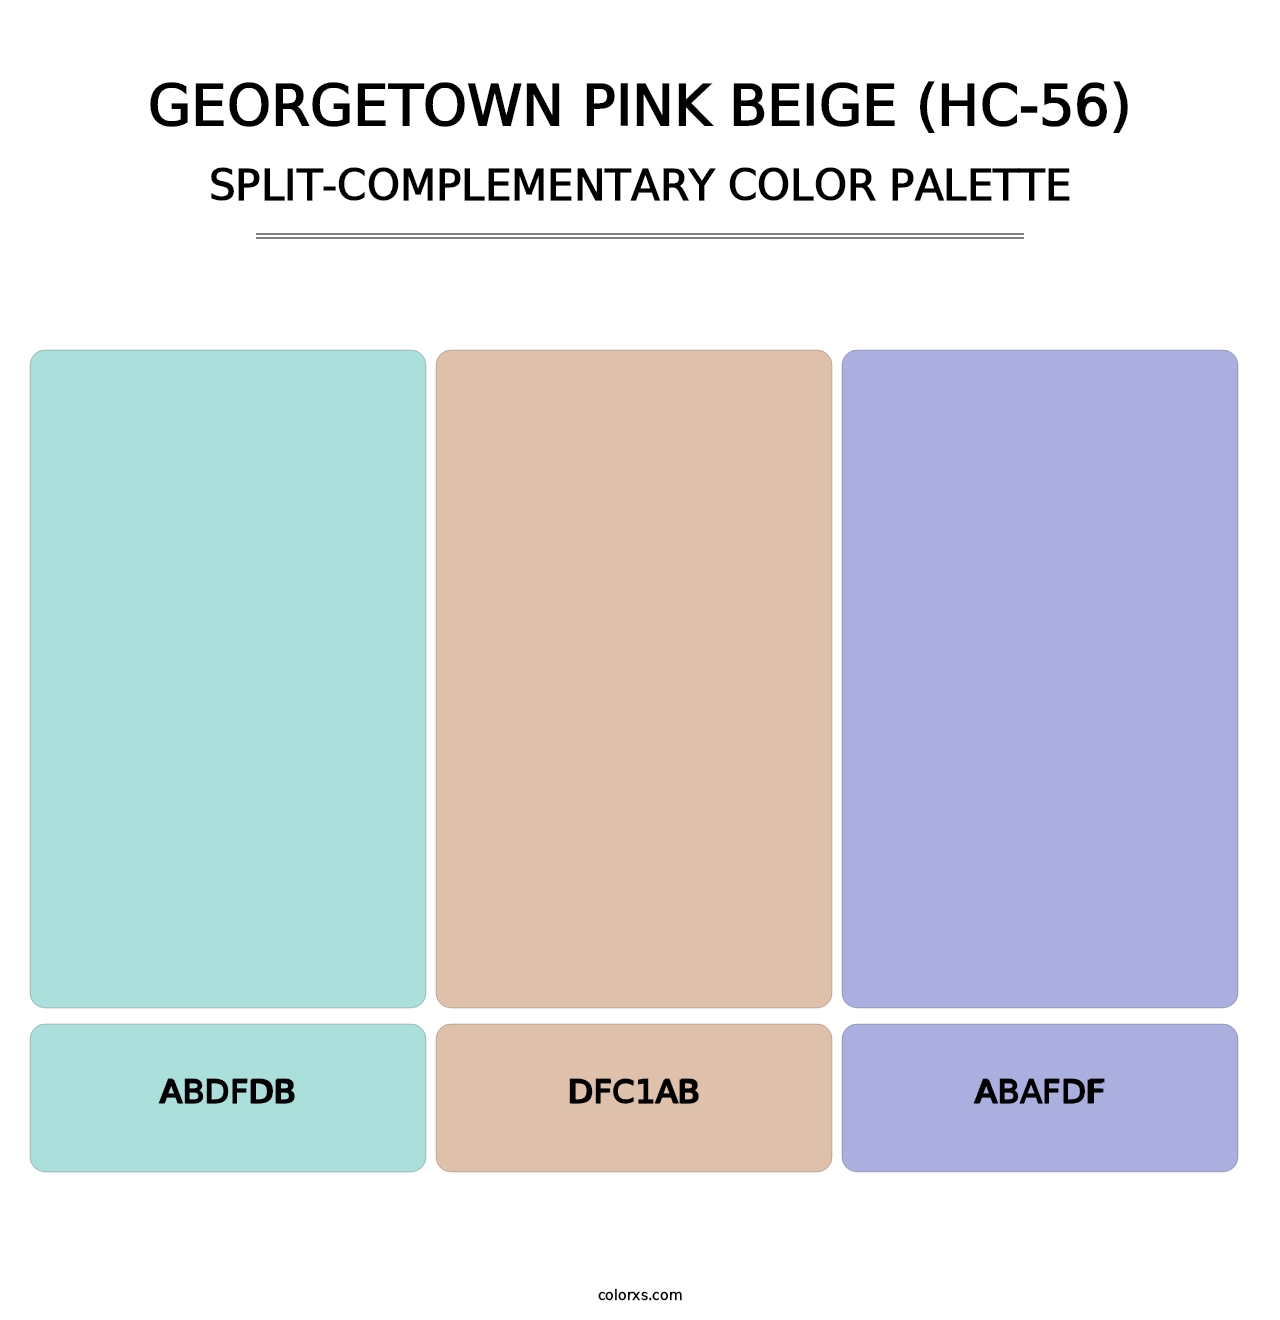 Georgetown Pink Beige (HC-56) - Split-Complementary Color Palette